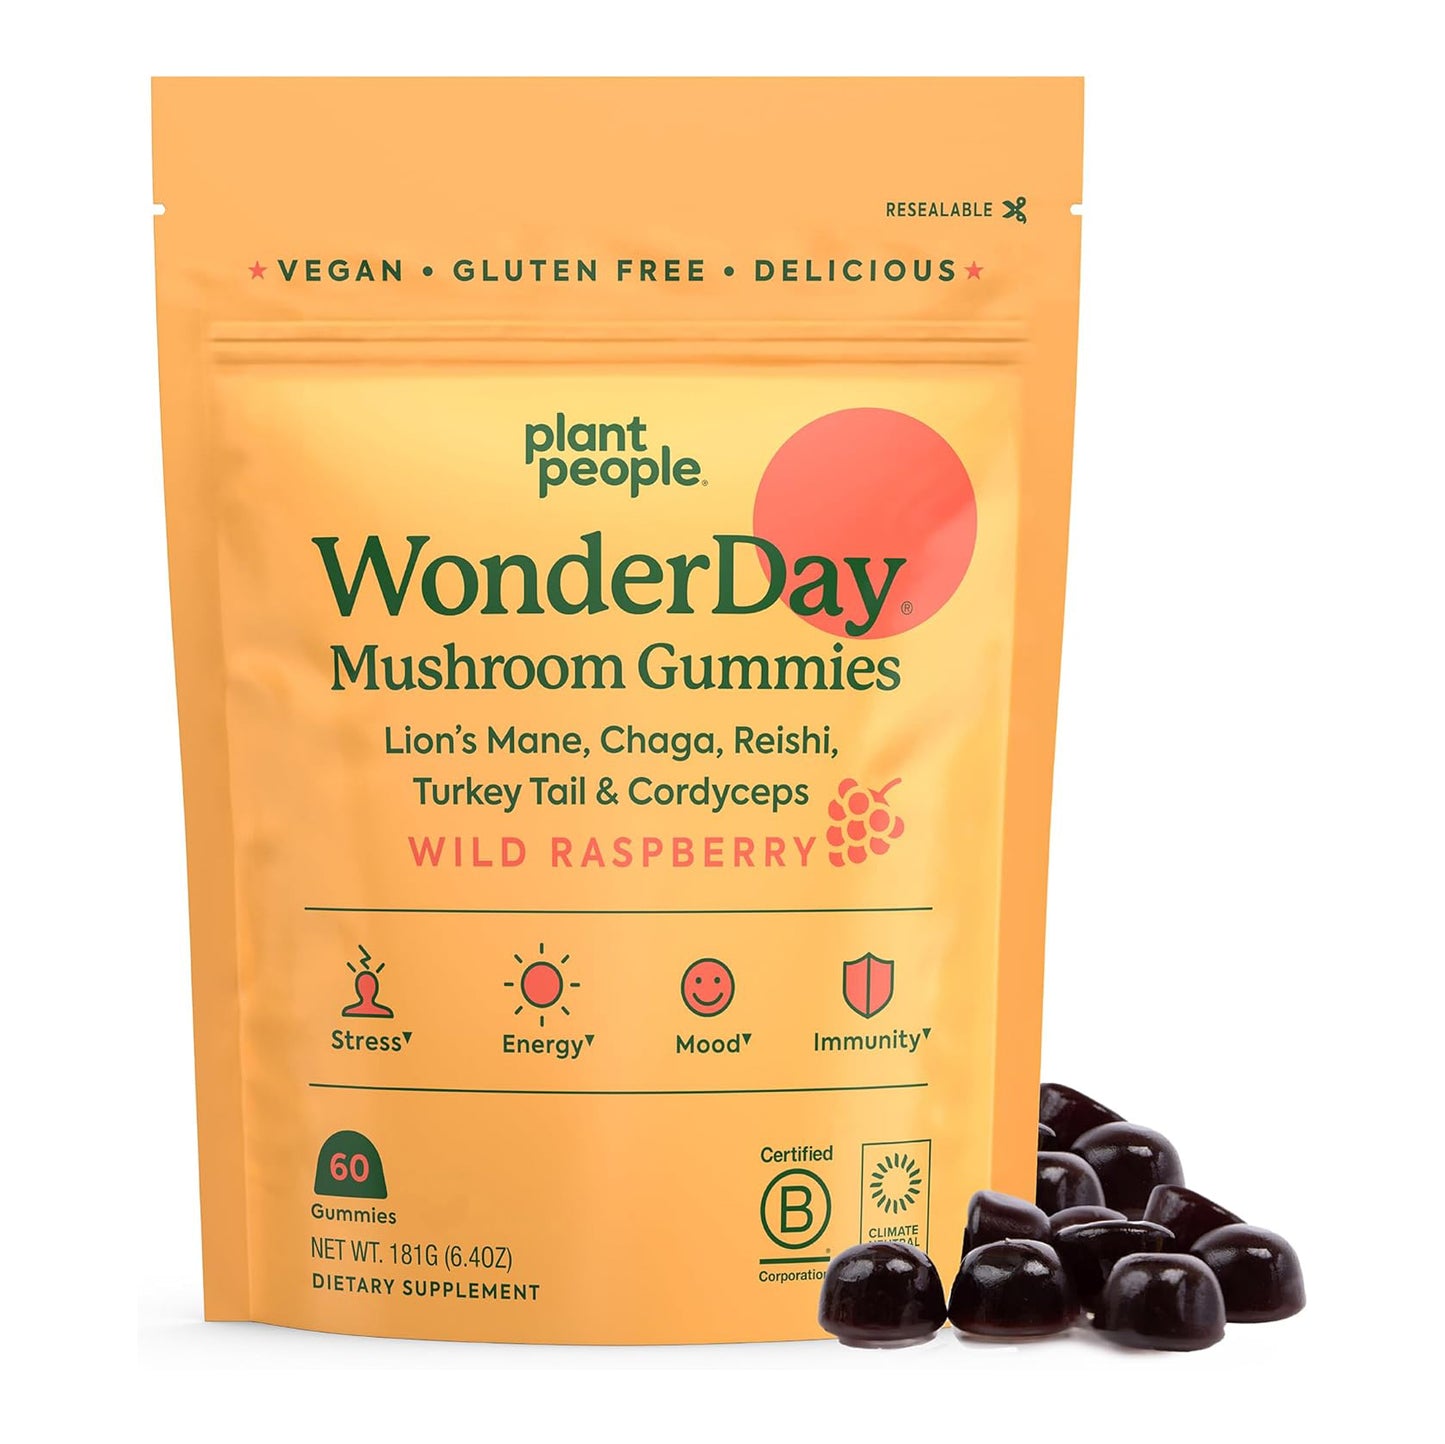 WonderDay Mushroom Gummies